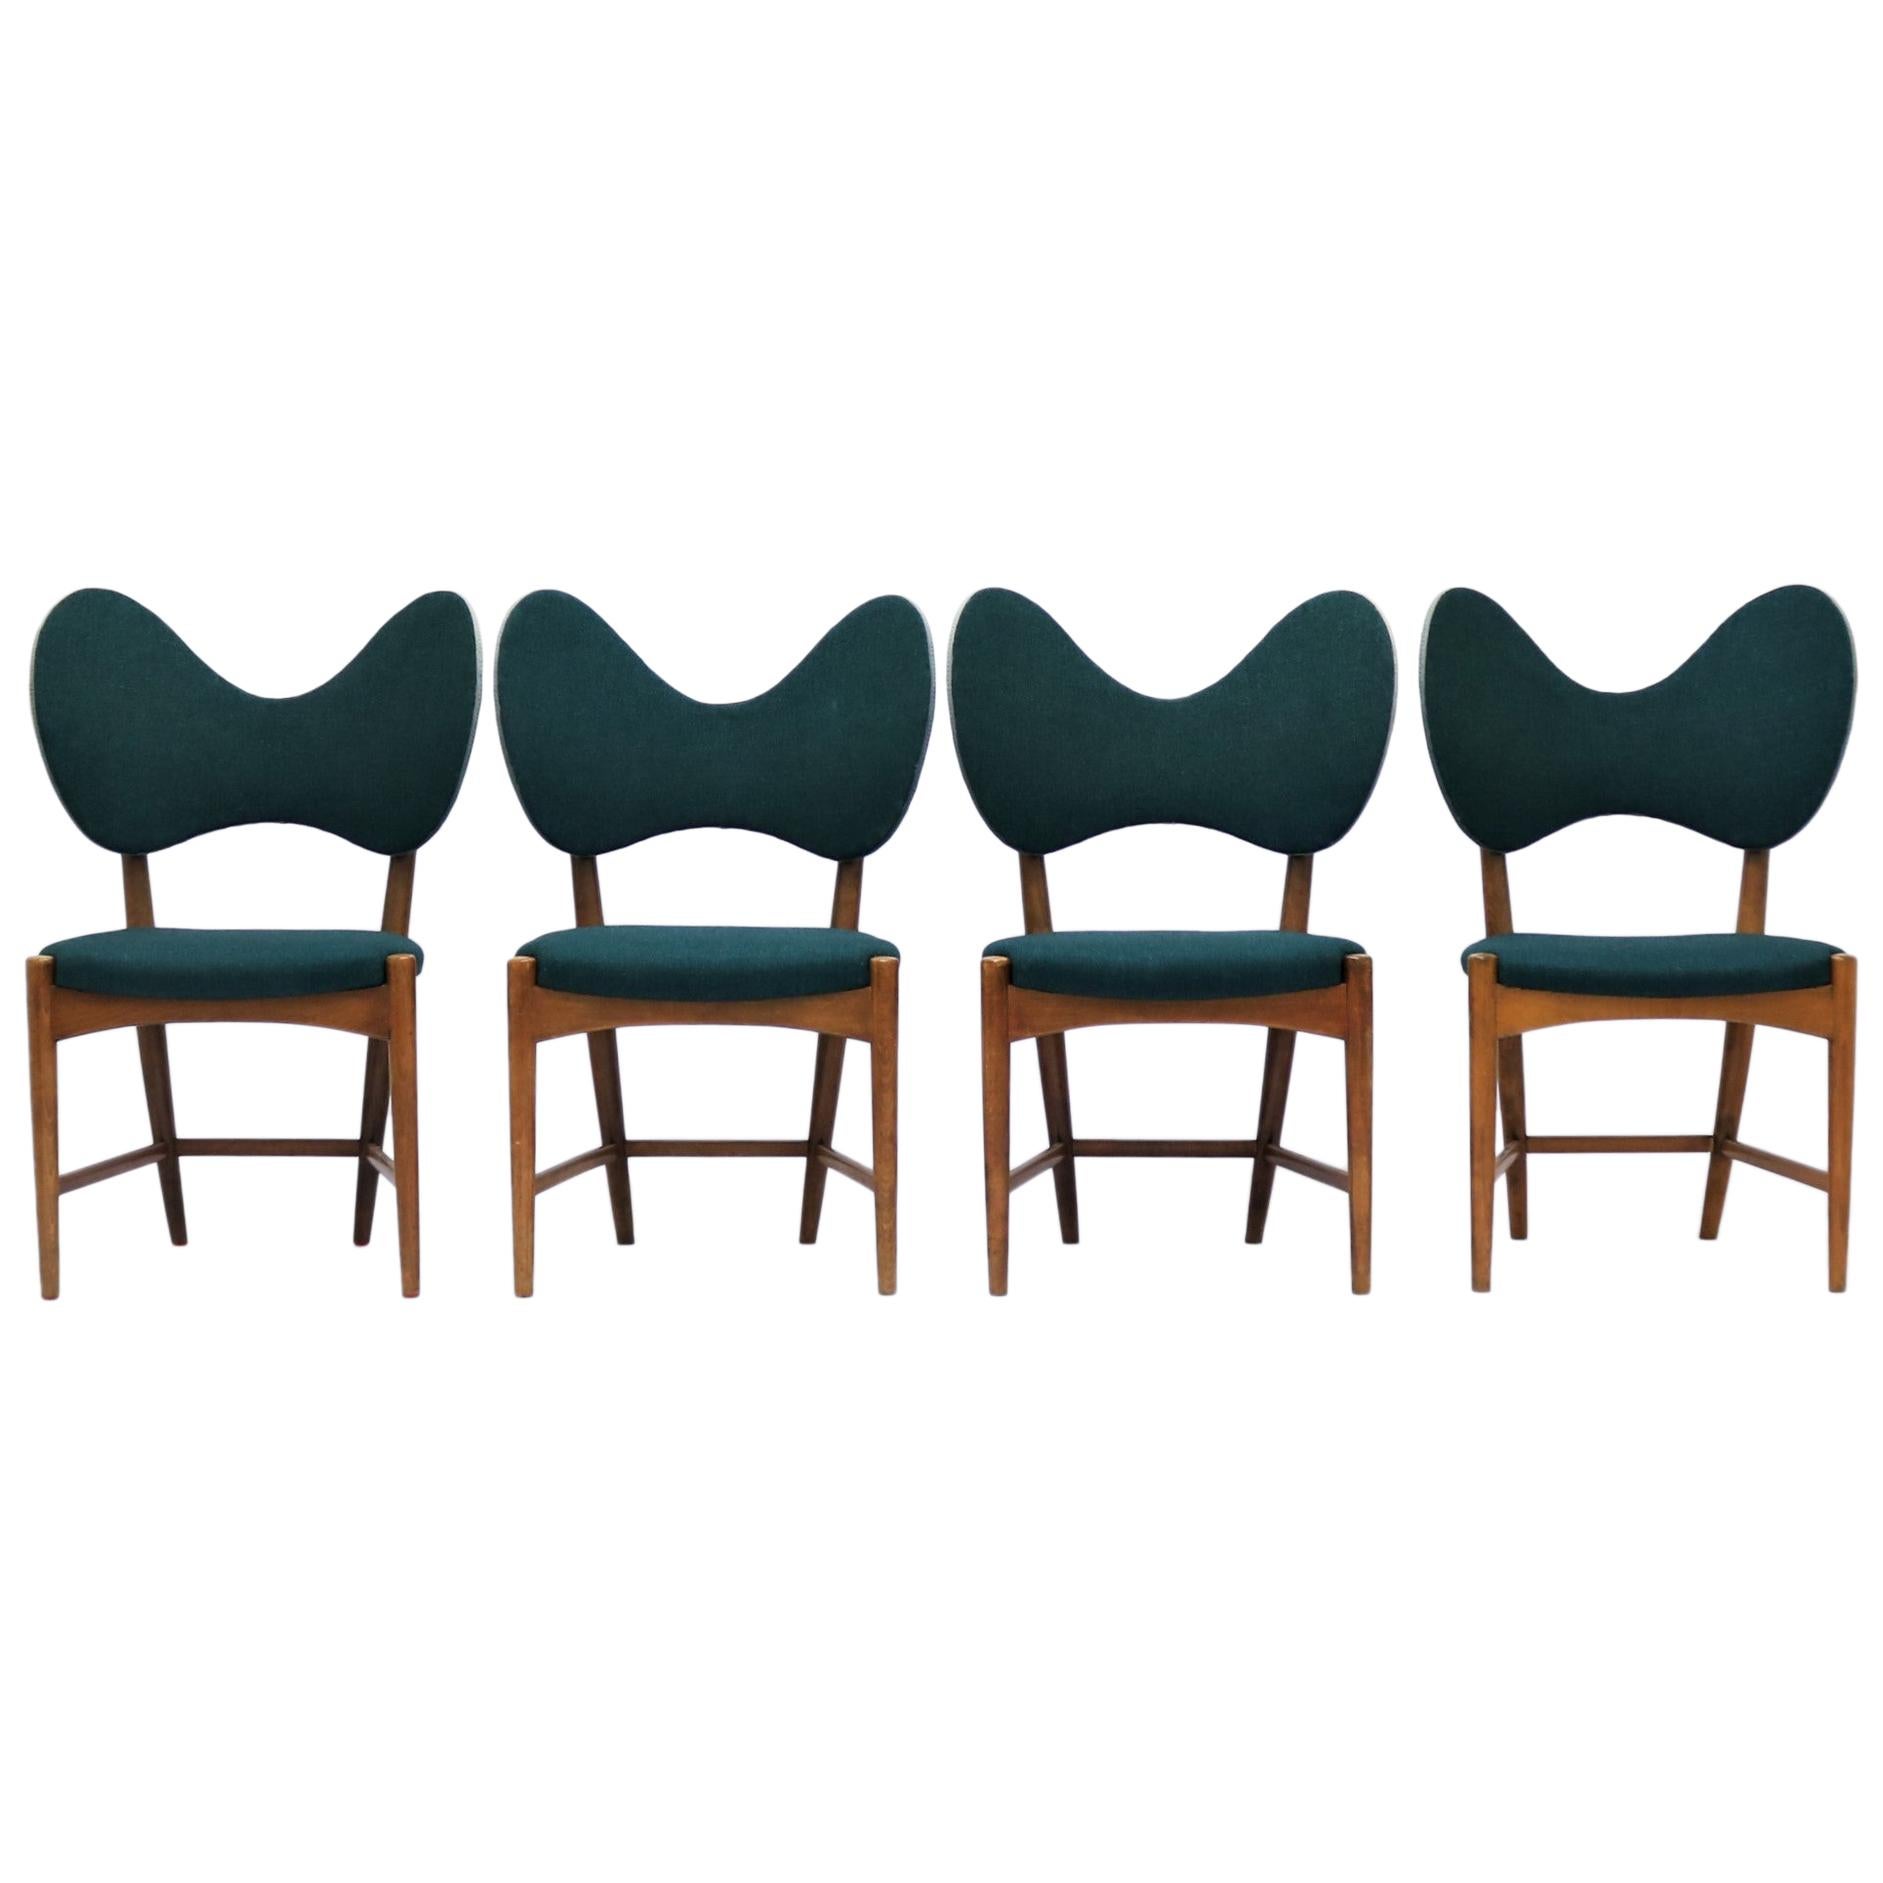 Danish Modern "Butterfly" Chairs by Eva & Nils Koppel, set of 4, 1950s